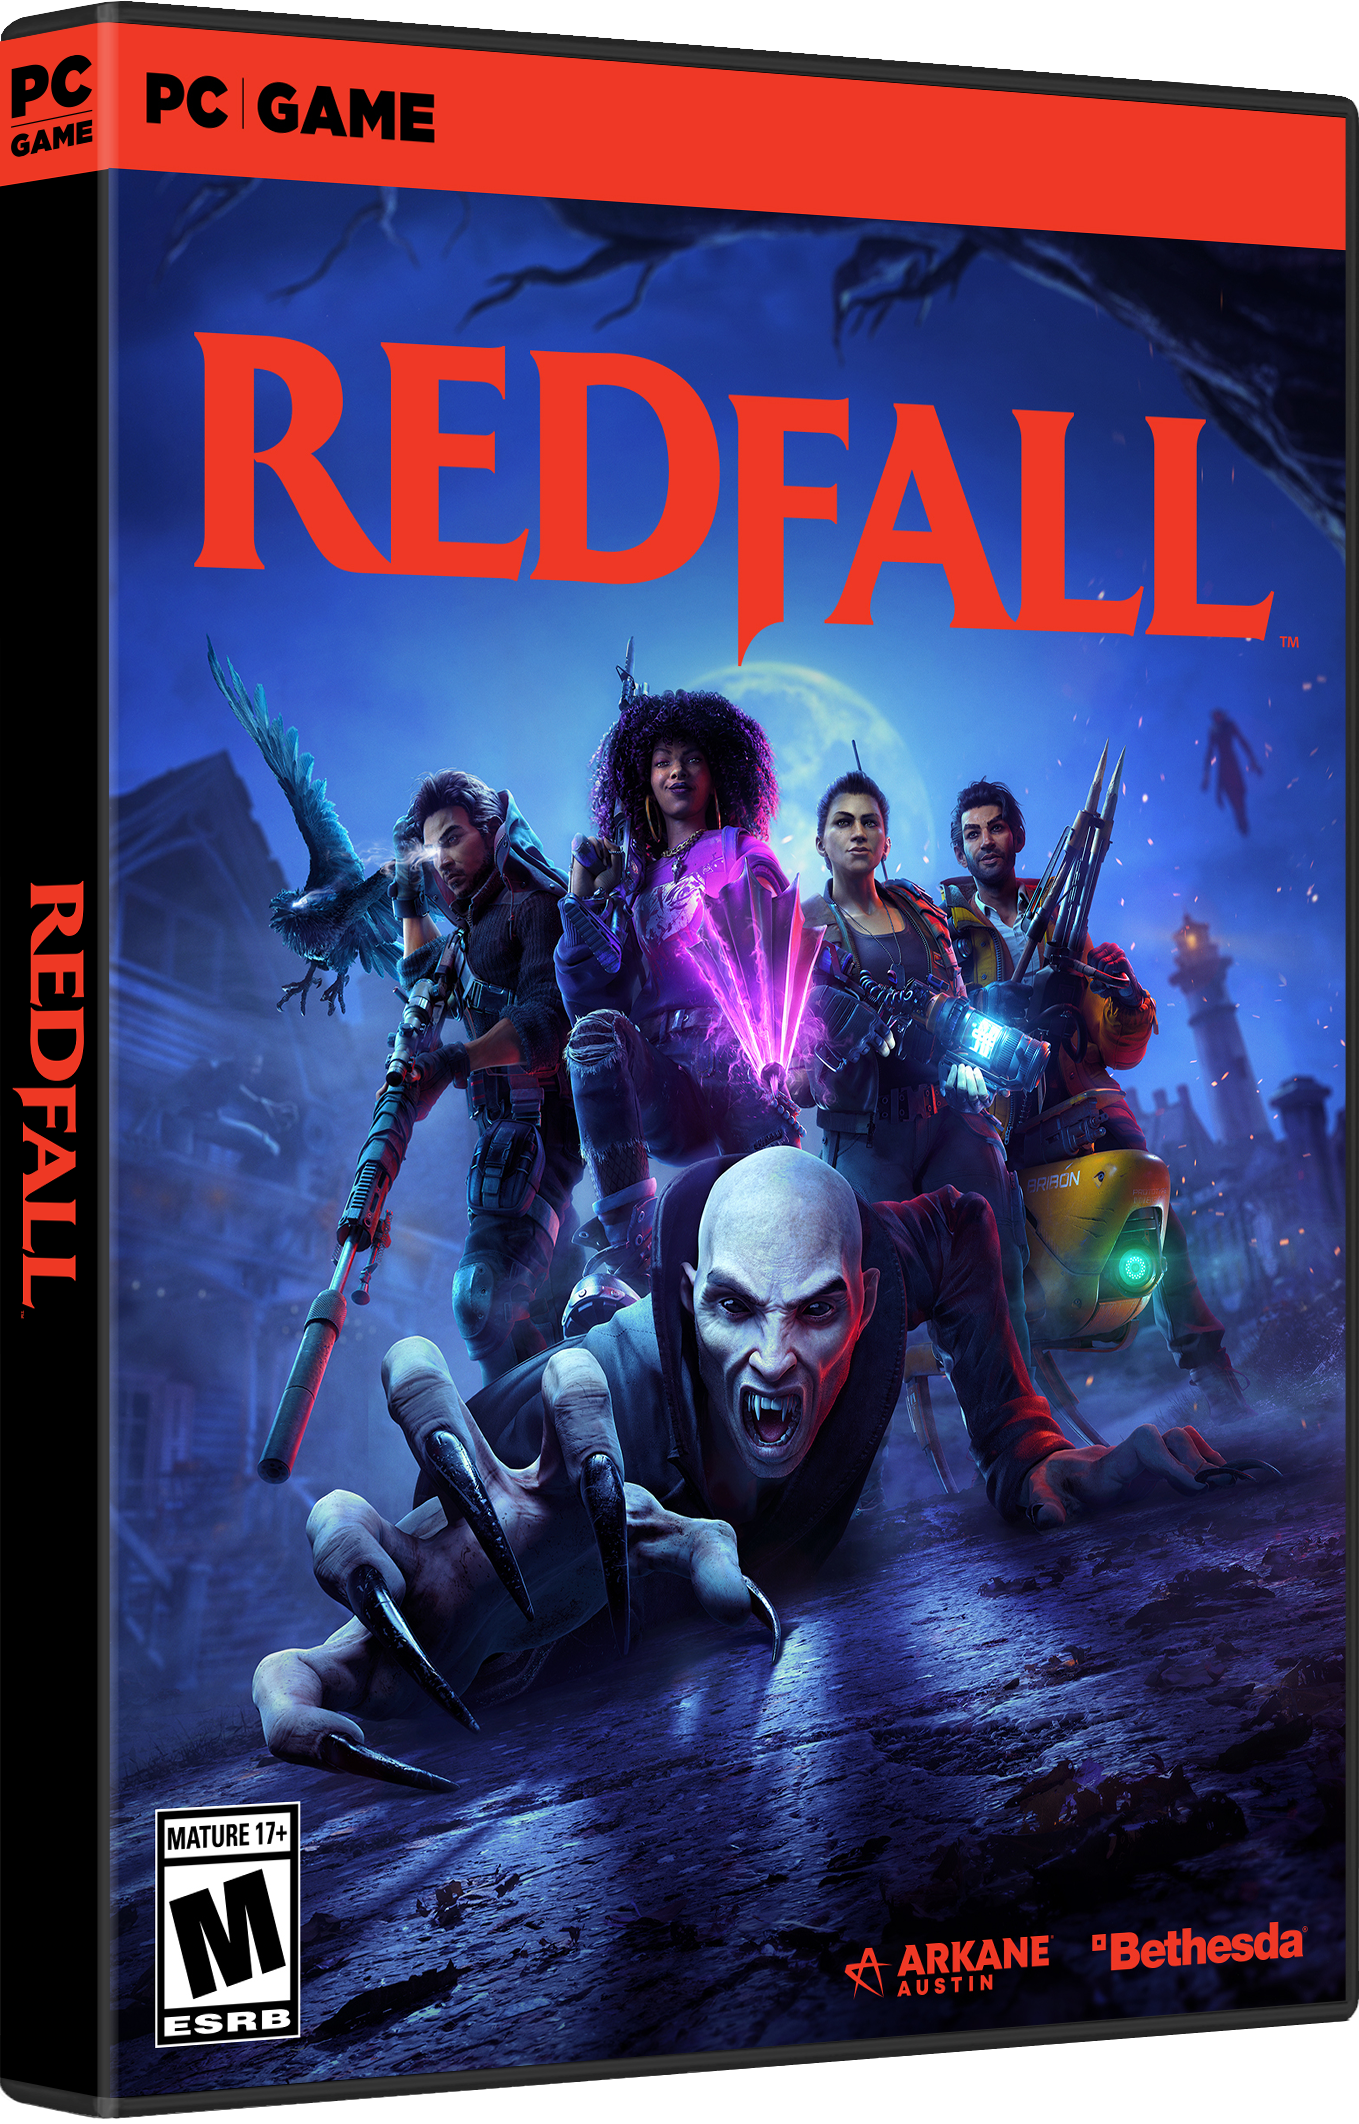 Redfall - PC Game